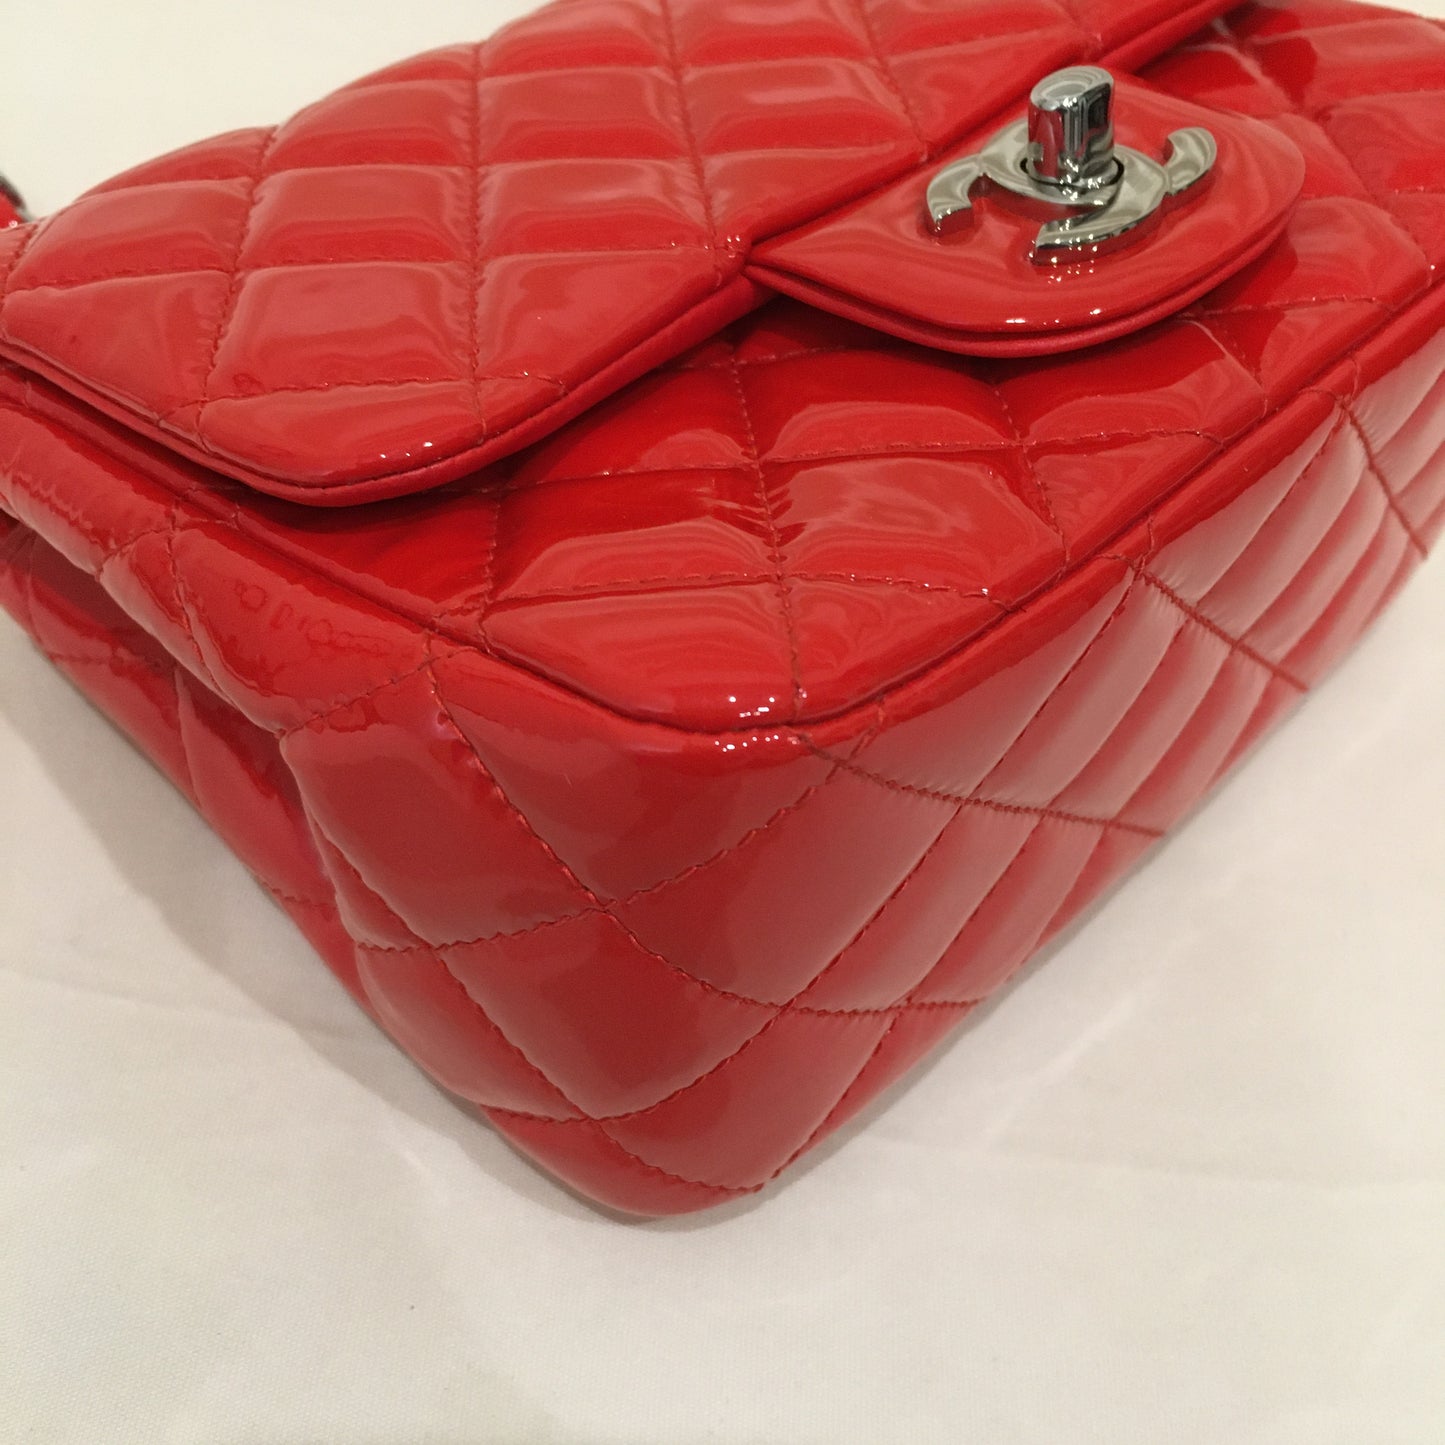 Chanel Red Patent Square Mini Flap Shoulder Bag Sku# 71321